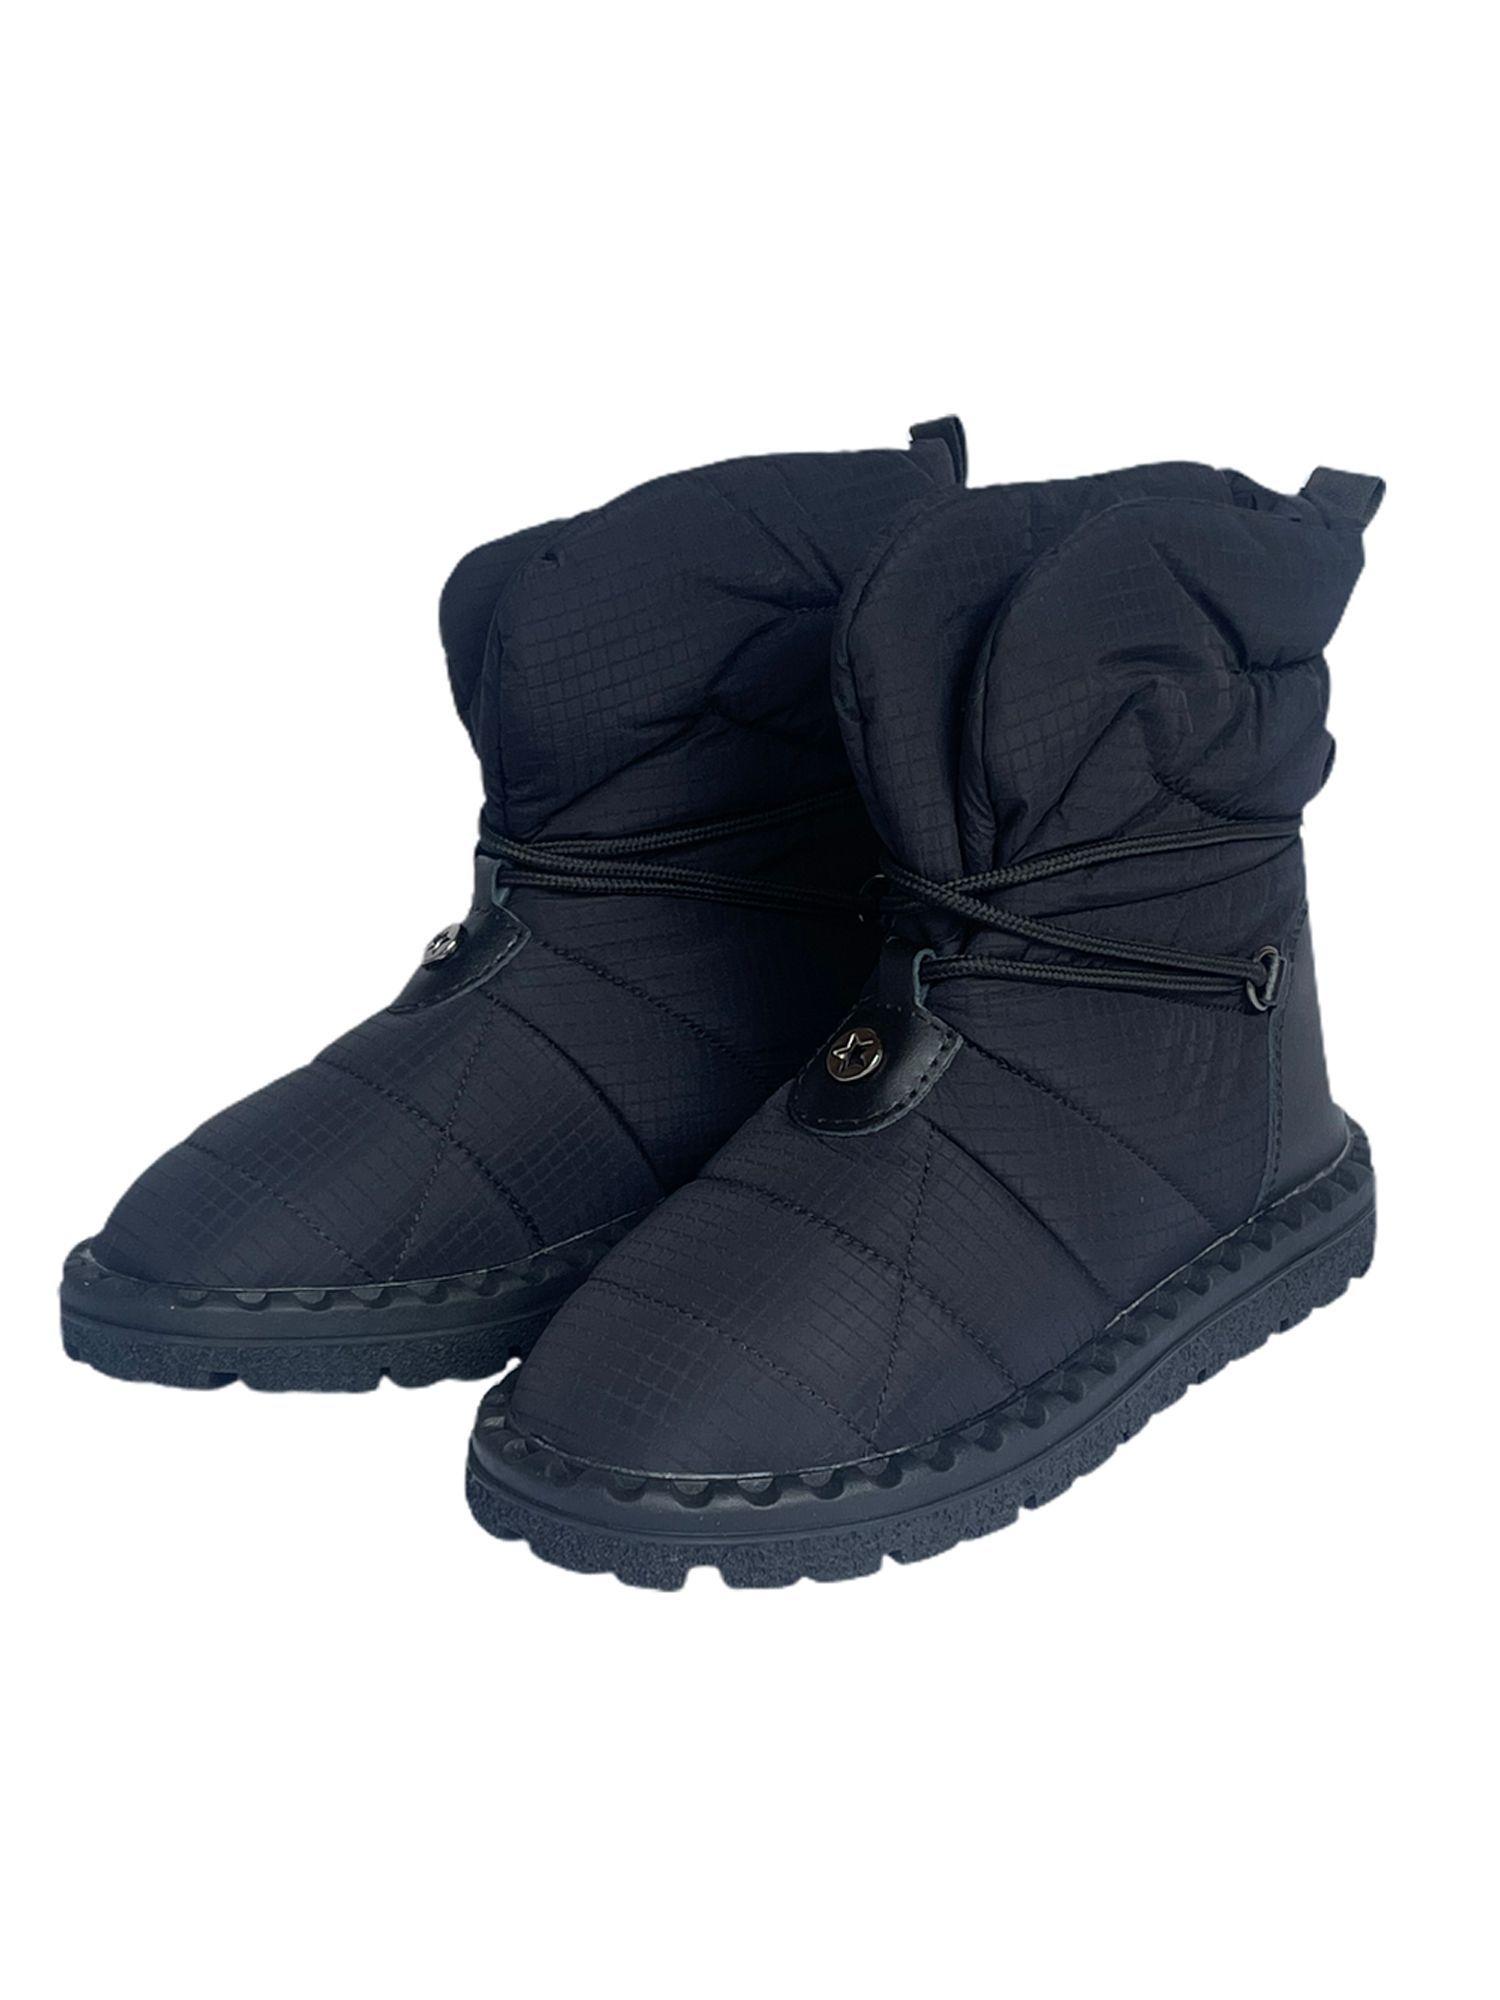 classy all navy blue girls winter snow boots